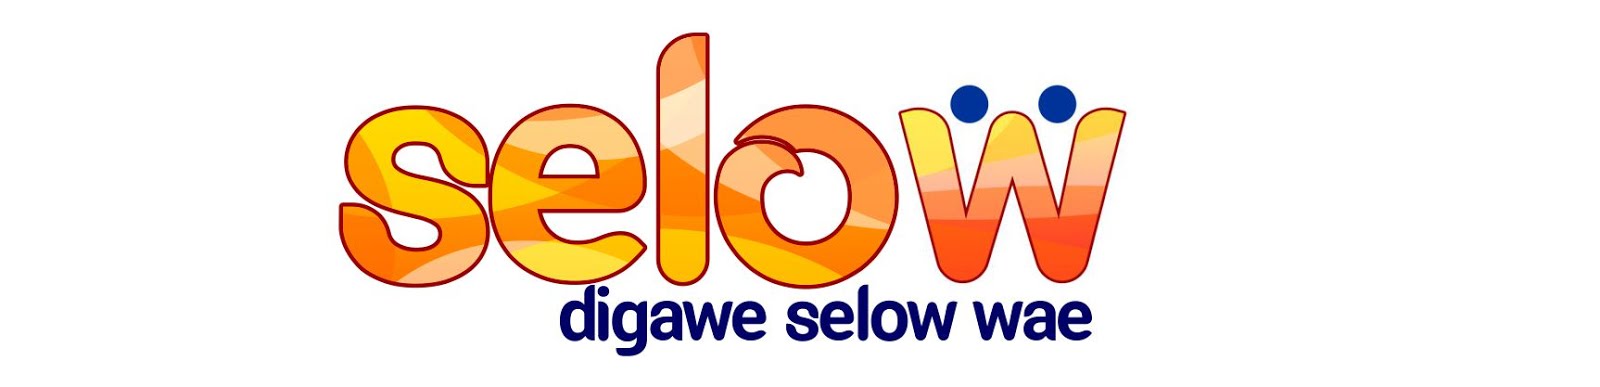 digawe Selow wae